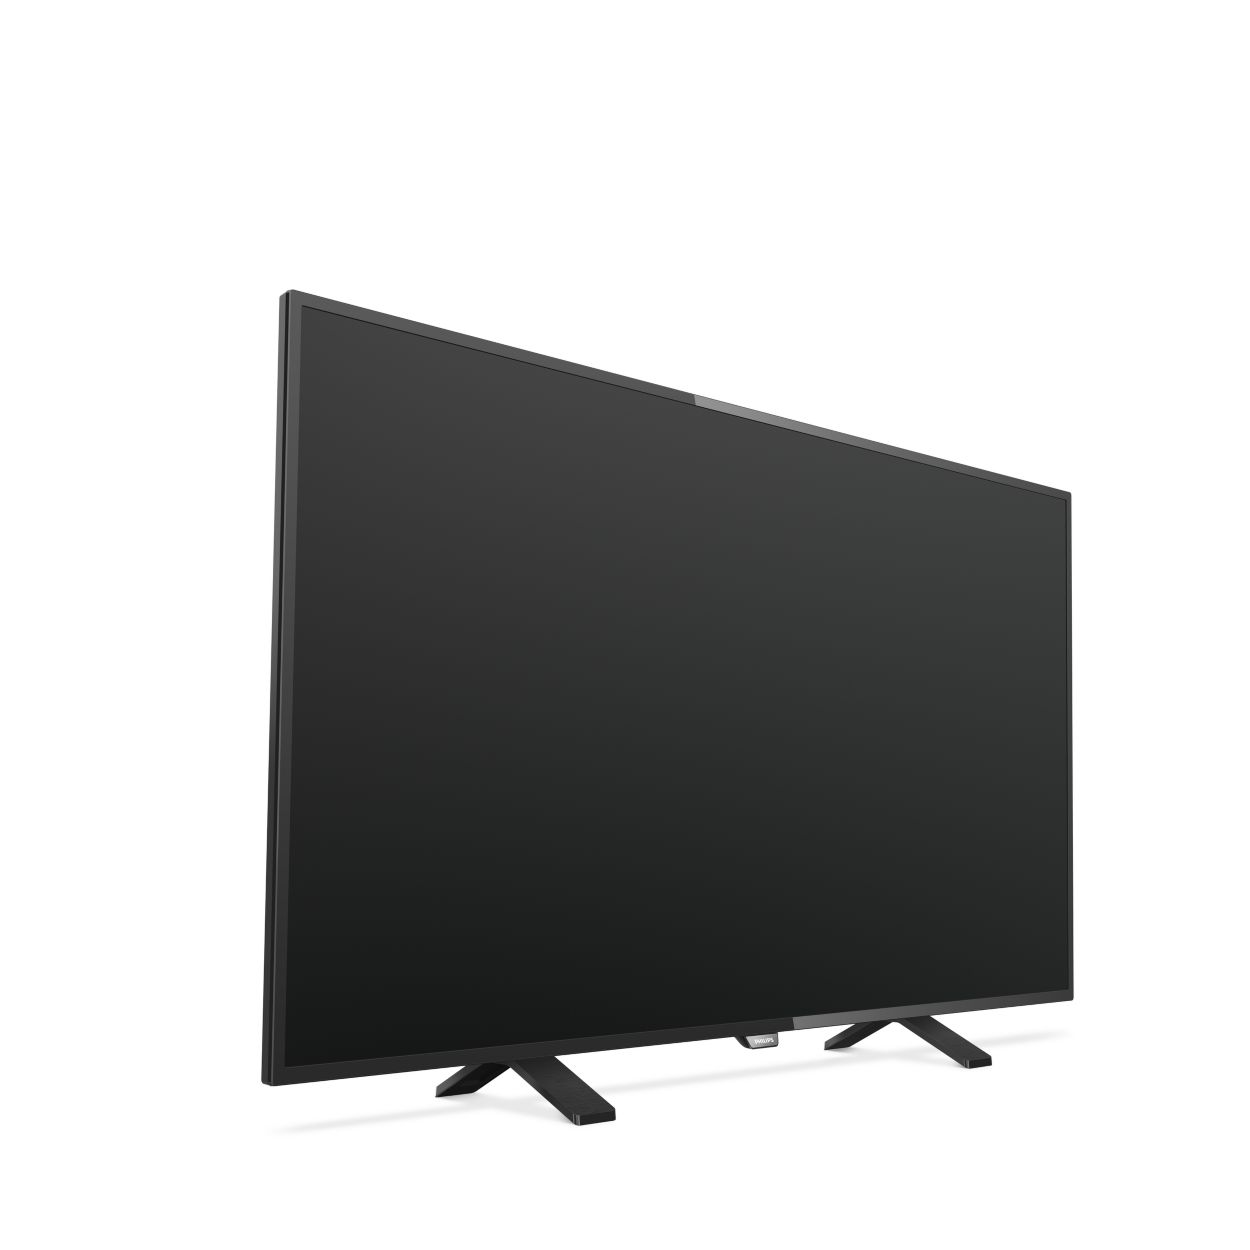 Филипс черный экран. Philips 43put4900/60. Телевизор Филипс 43 дюйма. Телевизор Philips 43put4900 43" (2015). 43put4900/60.